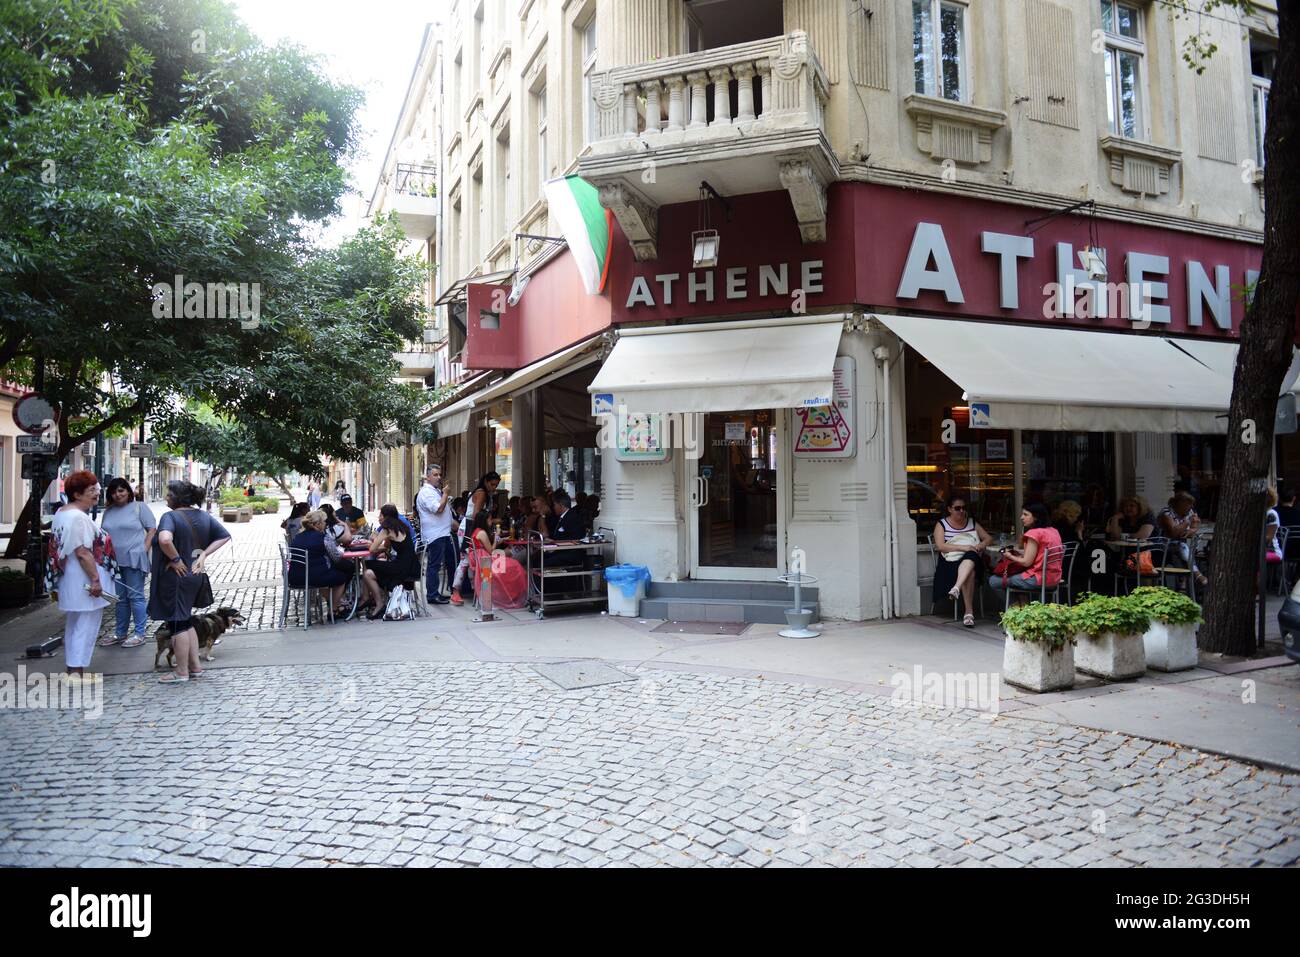 Athene patisera Café in Sofia, Bulgarien. Stockfoto